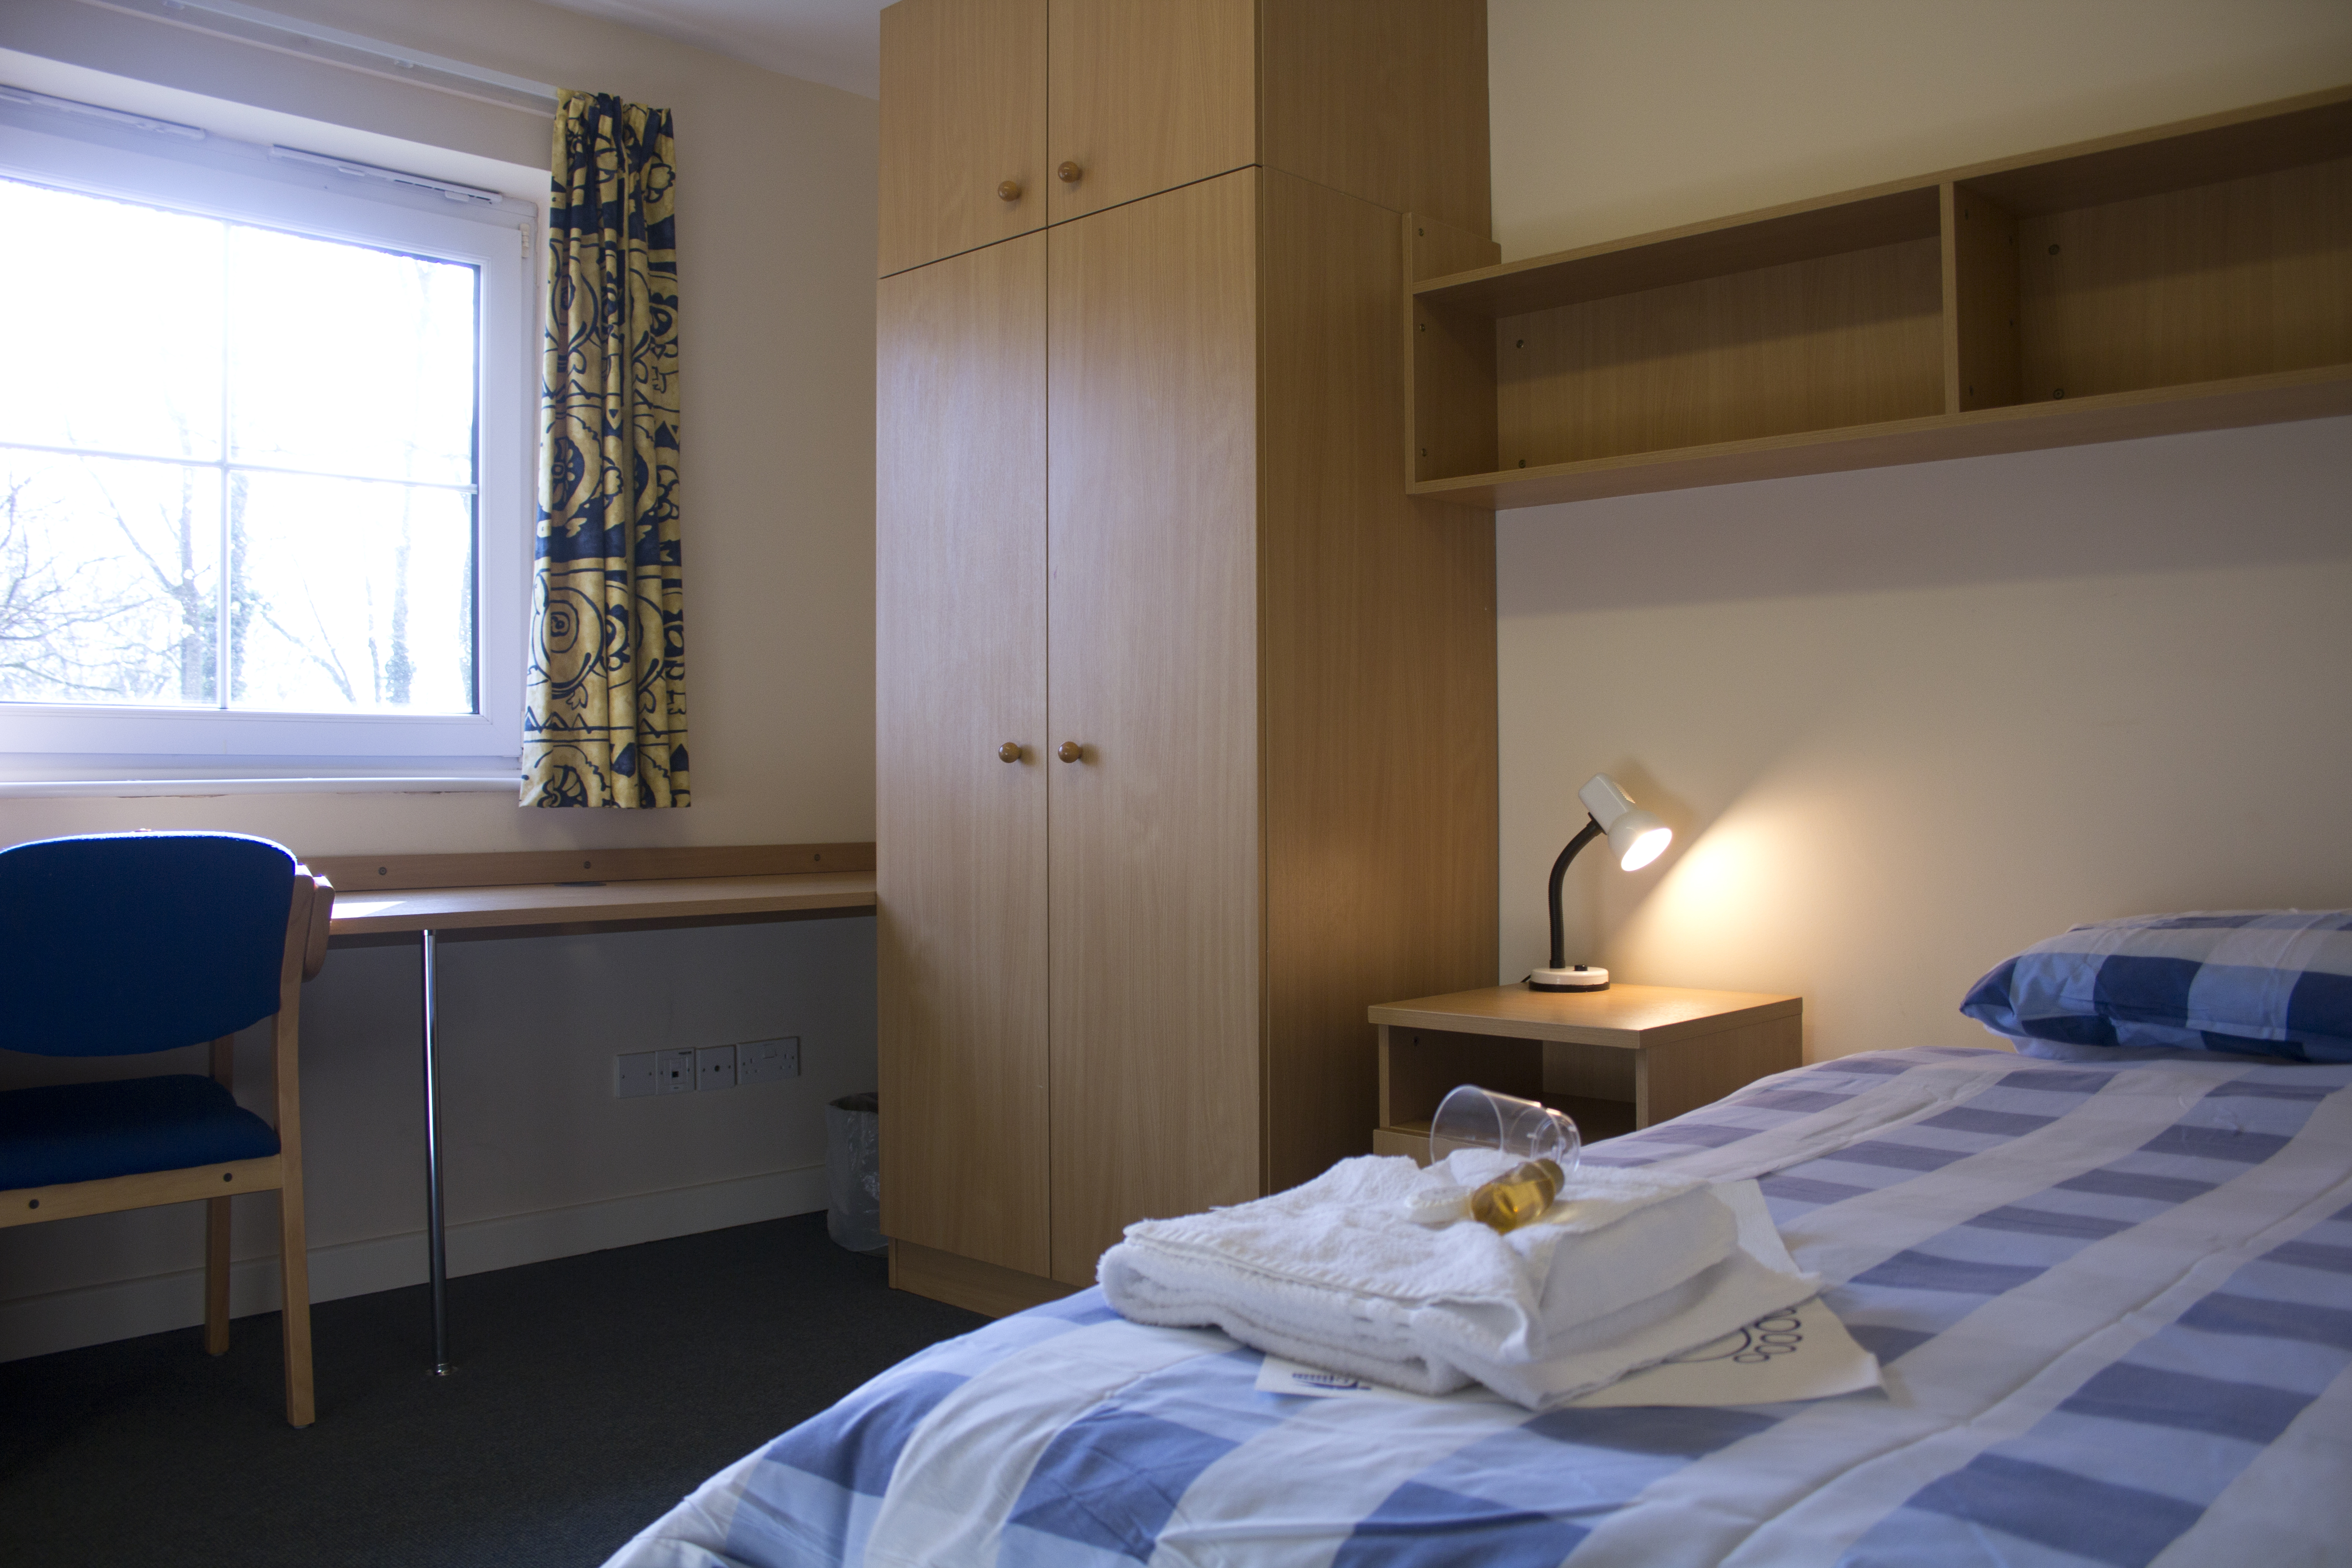 University of Chichester - Bedroom